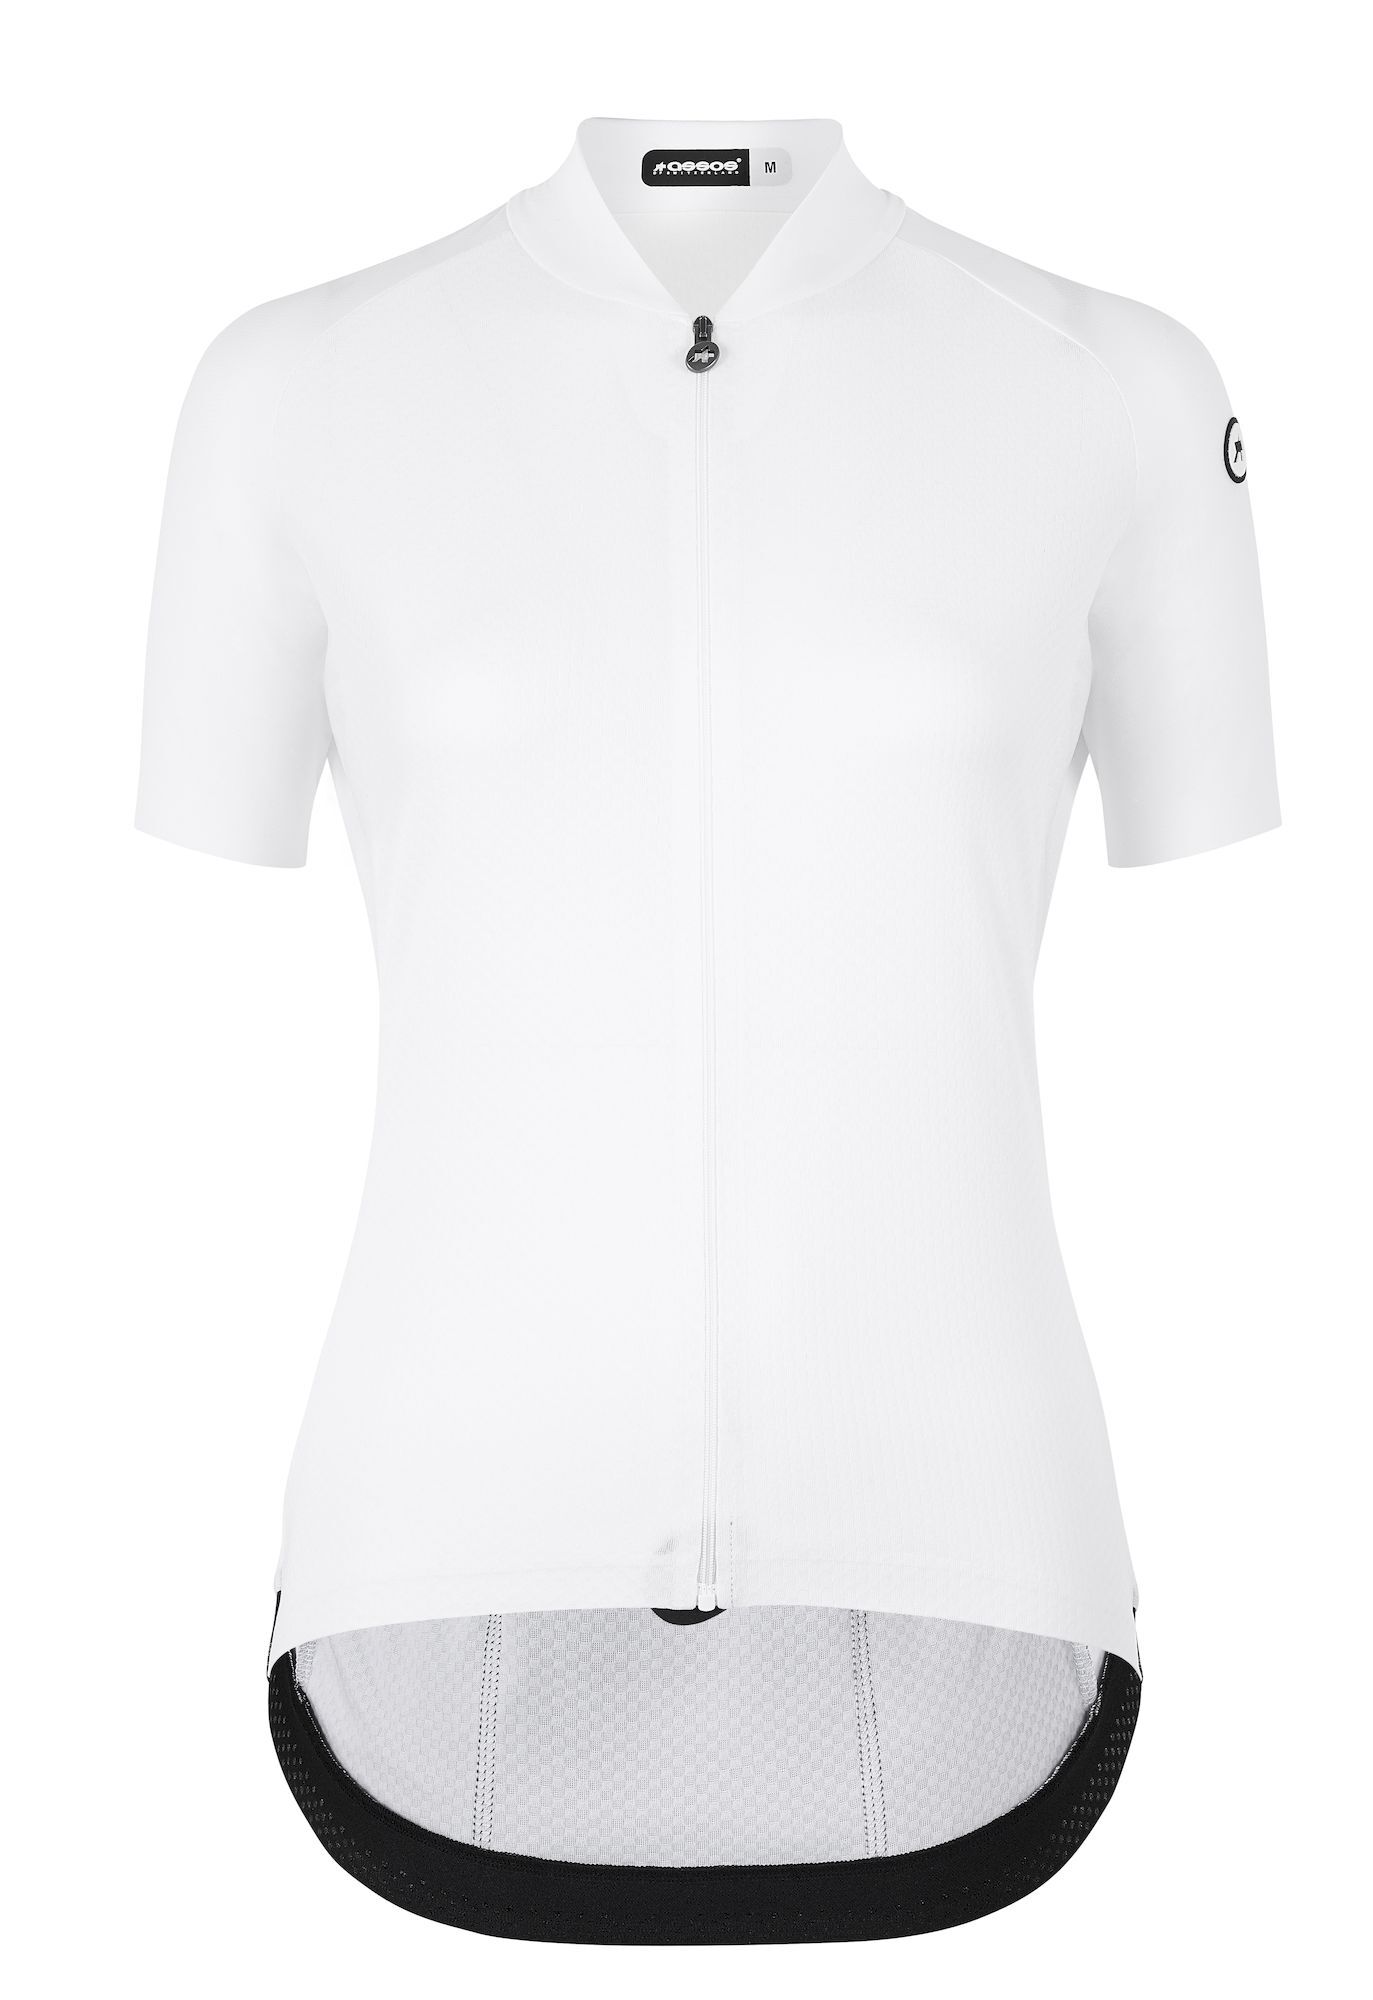 Assos Uma GT Jersey C2 EVO - Cycling jersey - Women's | Hardloop